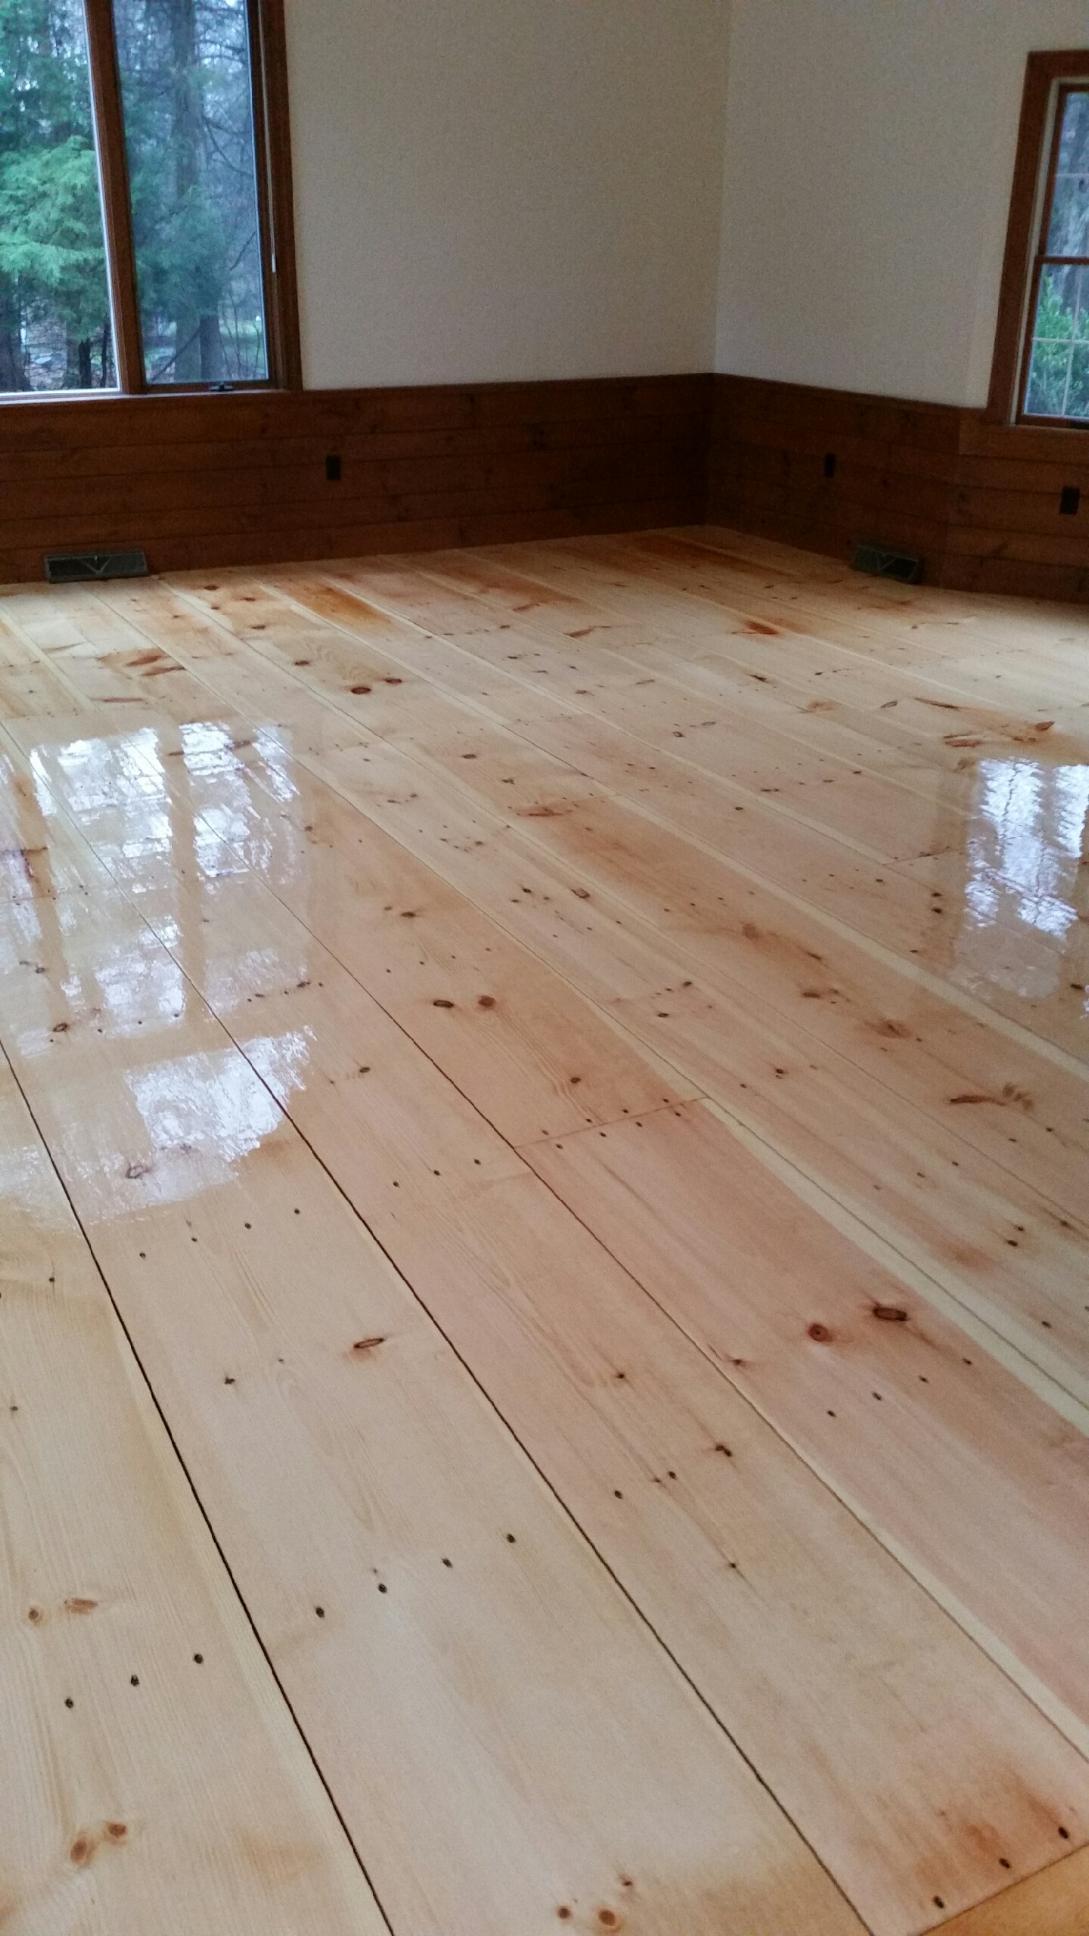 Eastern White Pine Hardwood Floors In Sudbury Ma Central Mass